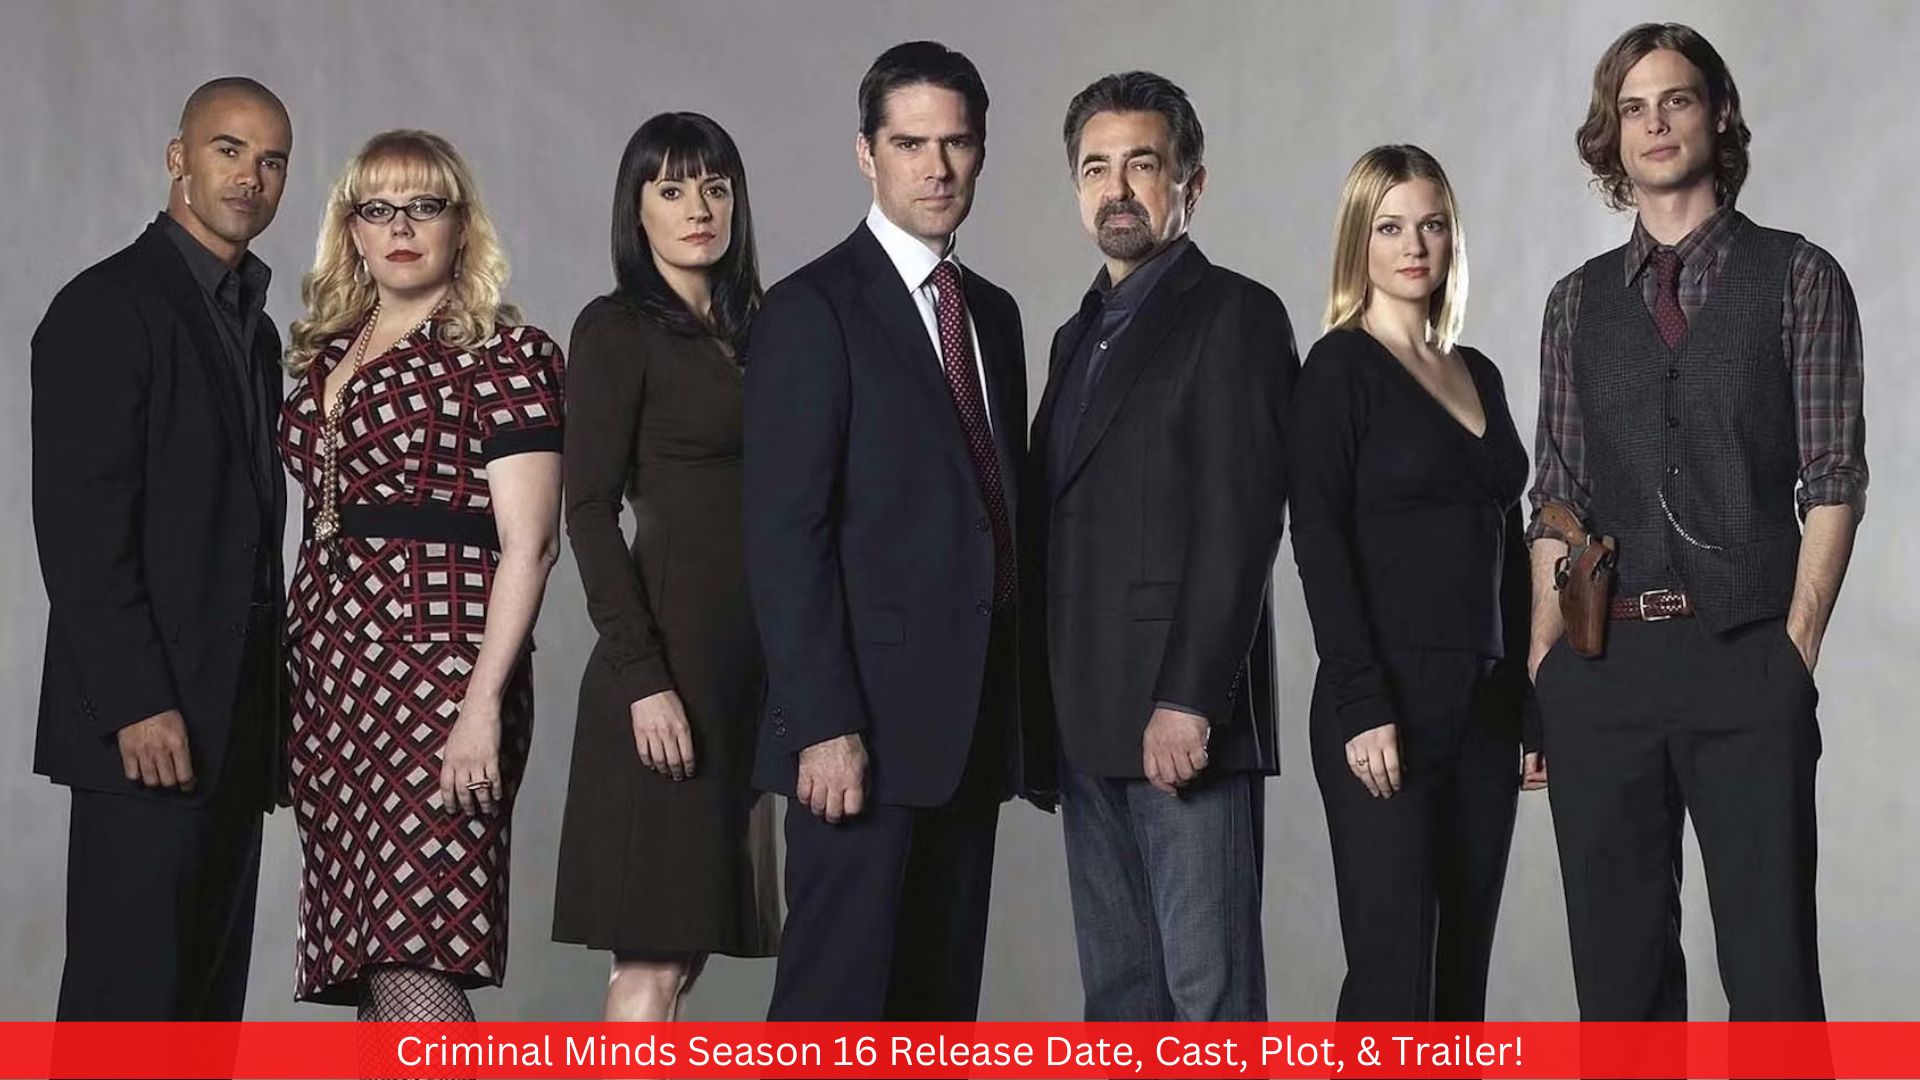 Criminal Minds Season 16 Release Date, Cast, Plot, & Trailer!